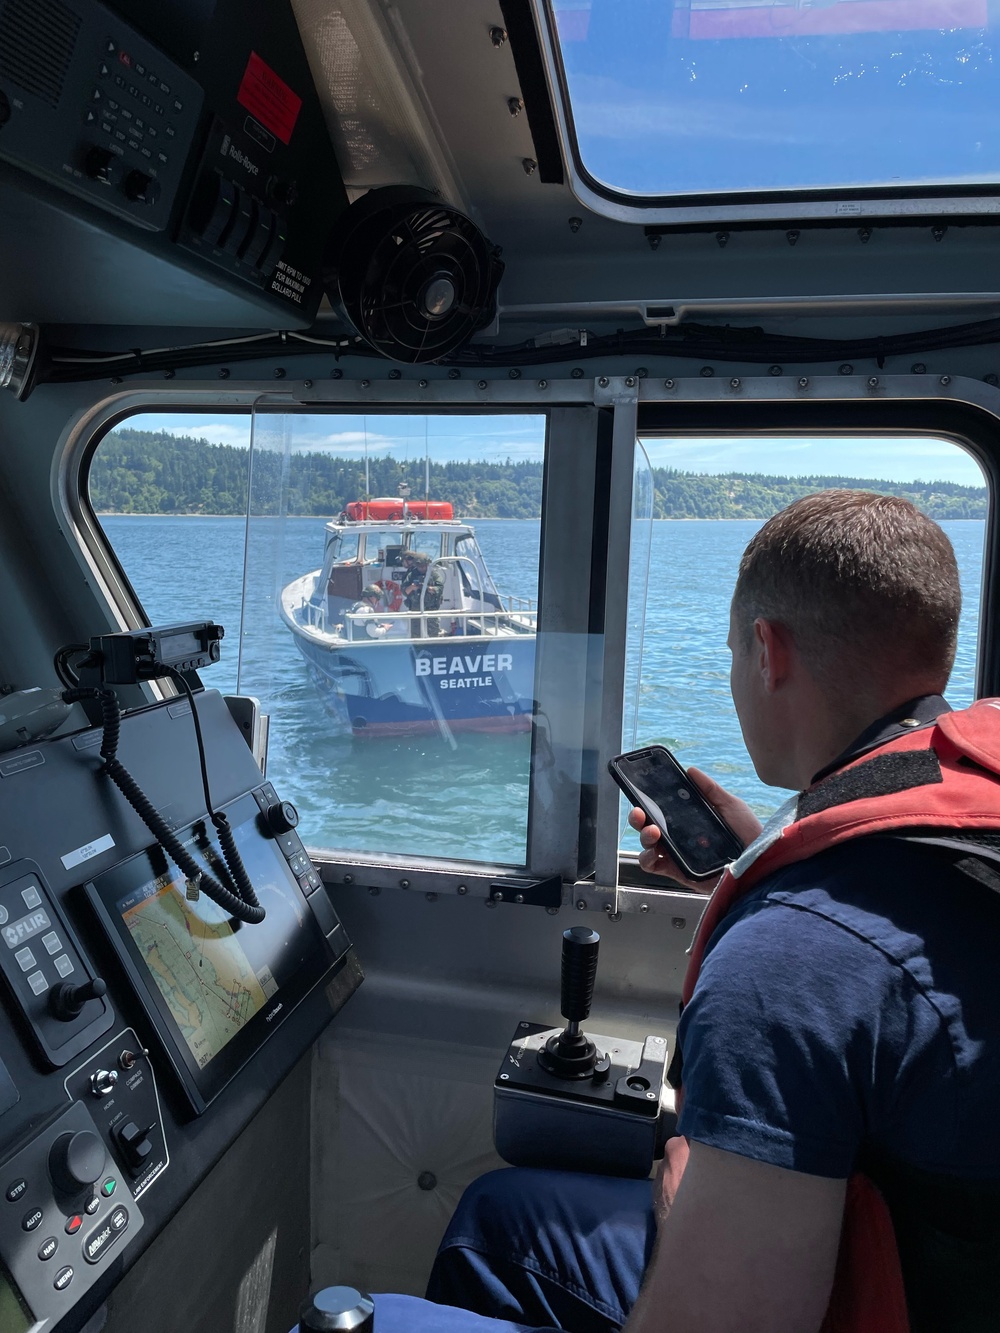 Coast Guard, partner agencies respond to public safety threat in Puget Sound, WA